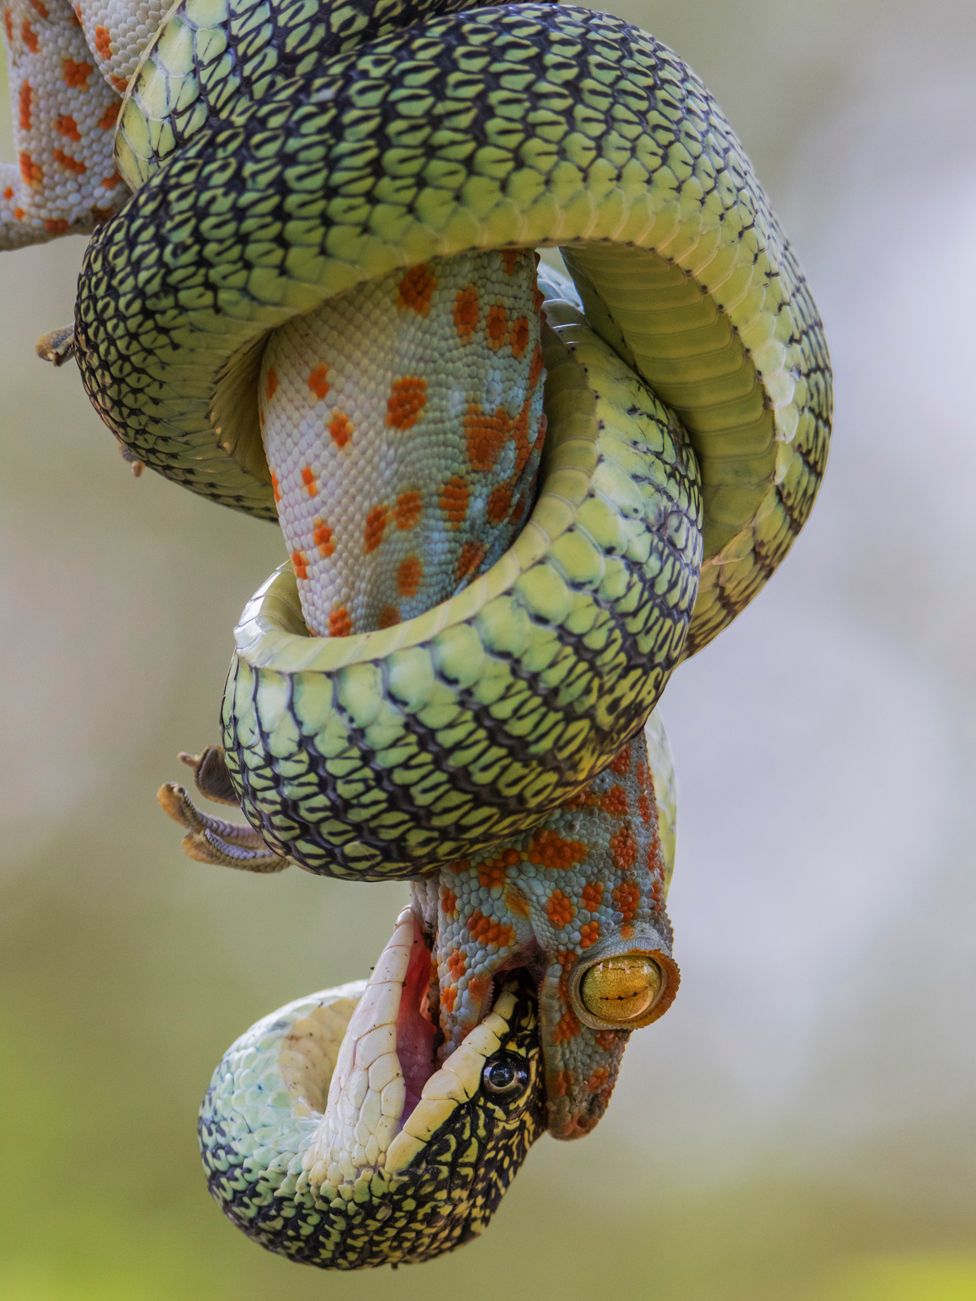 A tokay gecko bites a golden tree snake